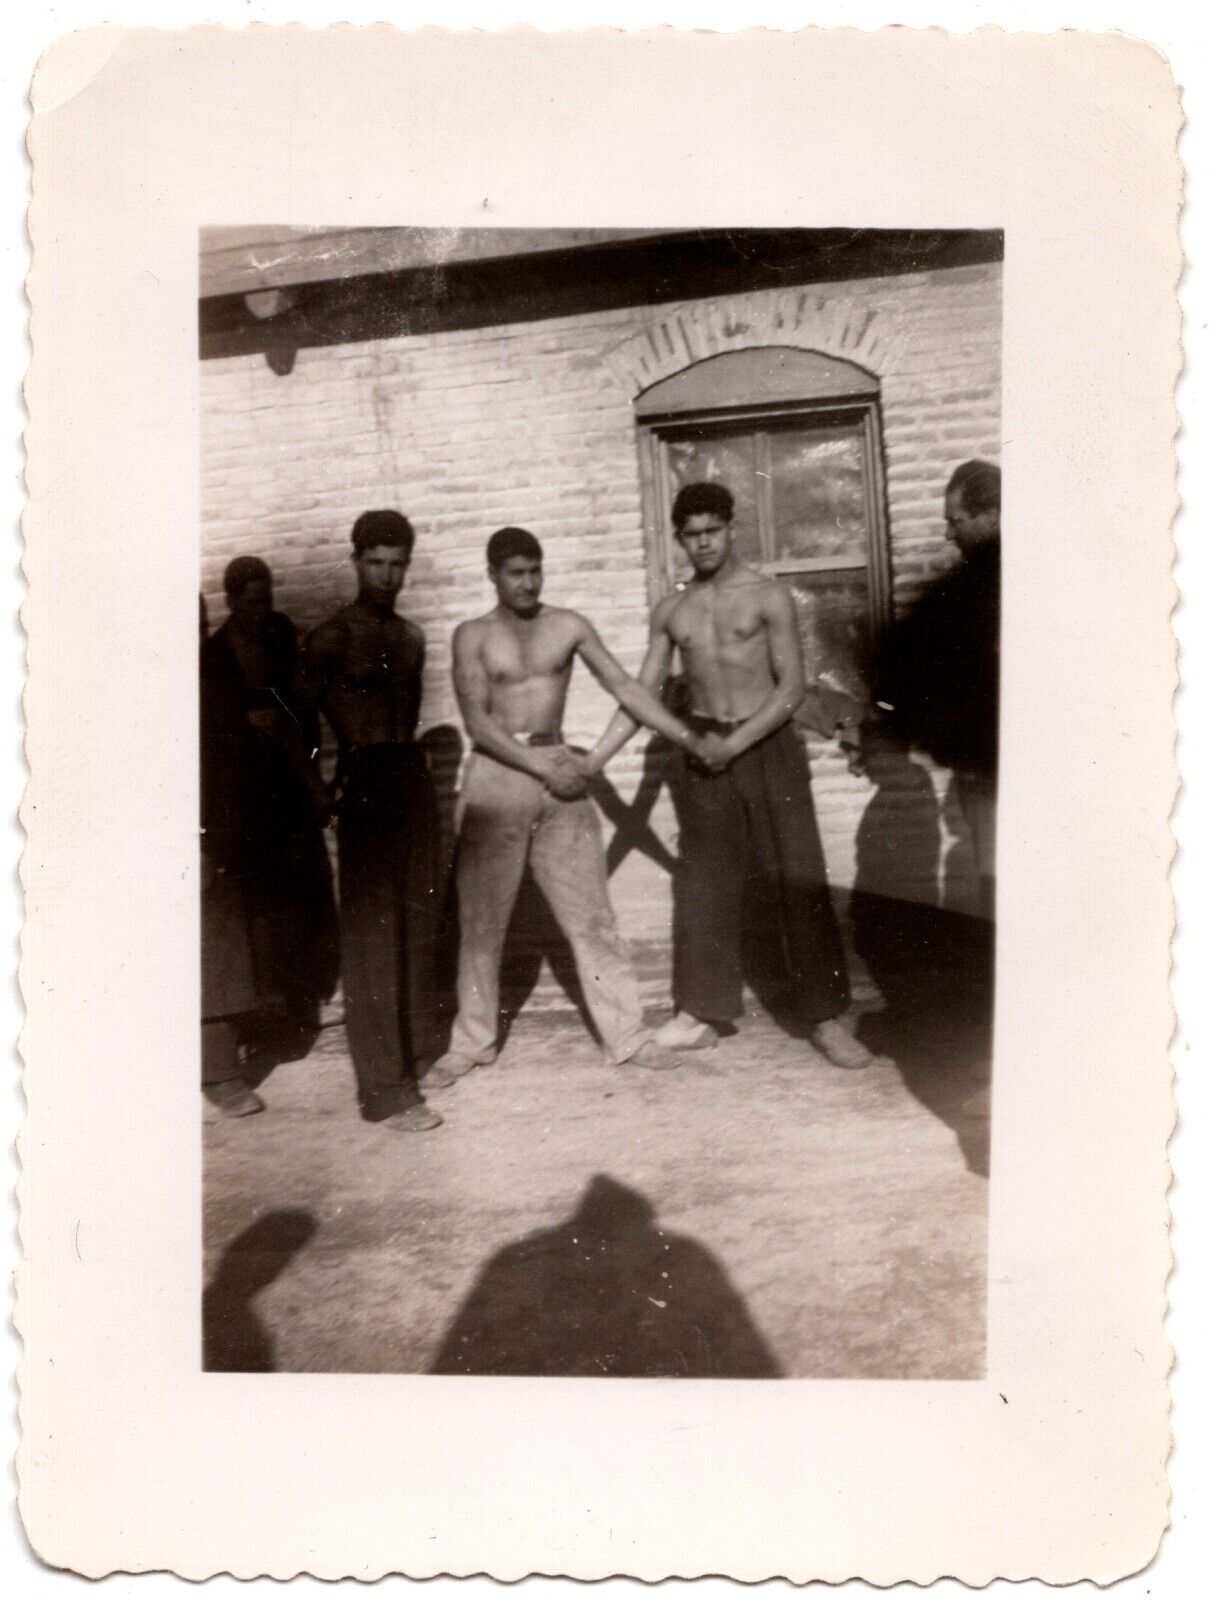 VINTAGE B&W SNAPSHOT CIRCA 1930s SHIRTLESS MEN HOLDING HANDS OUTSIDE